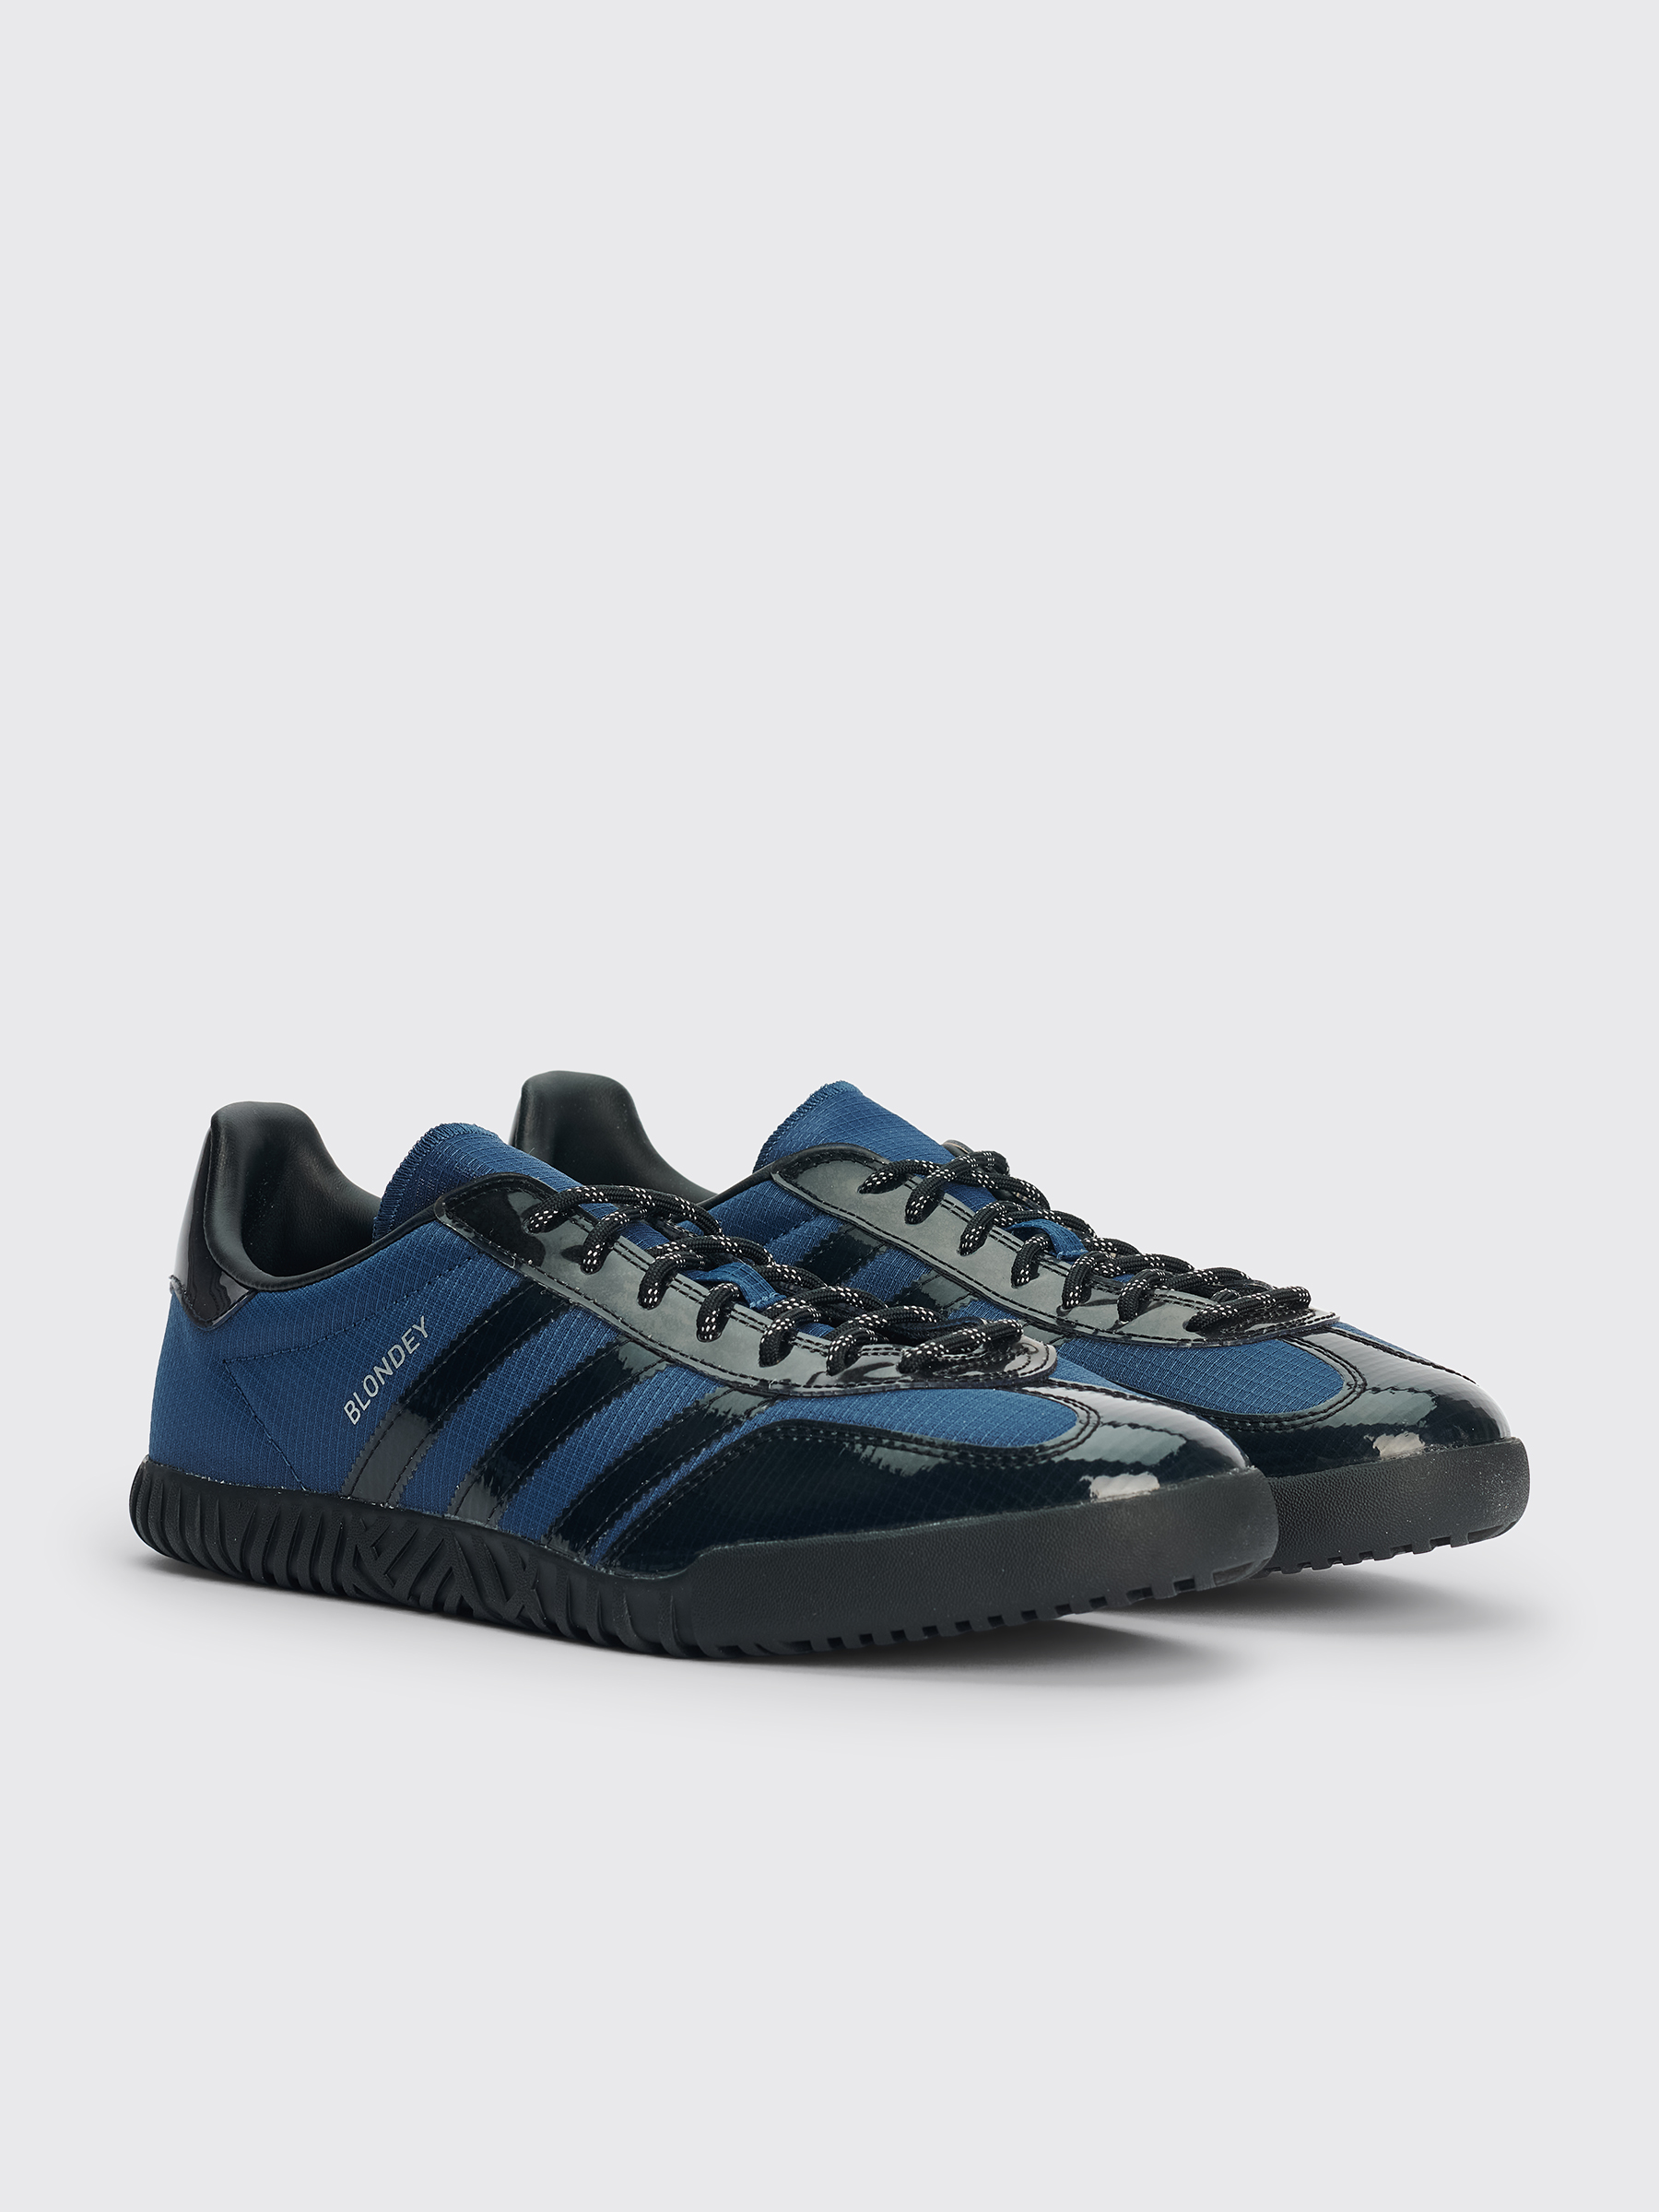 Très Bien - adidas by Blondey Gazelle Indoor Mineral Blue / Core Black